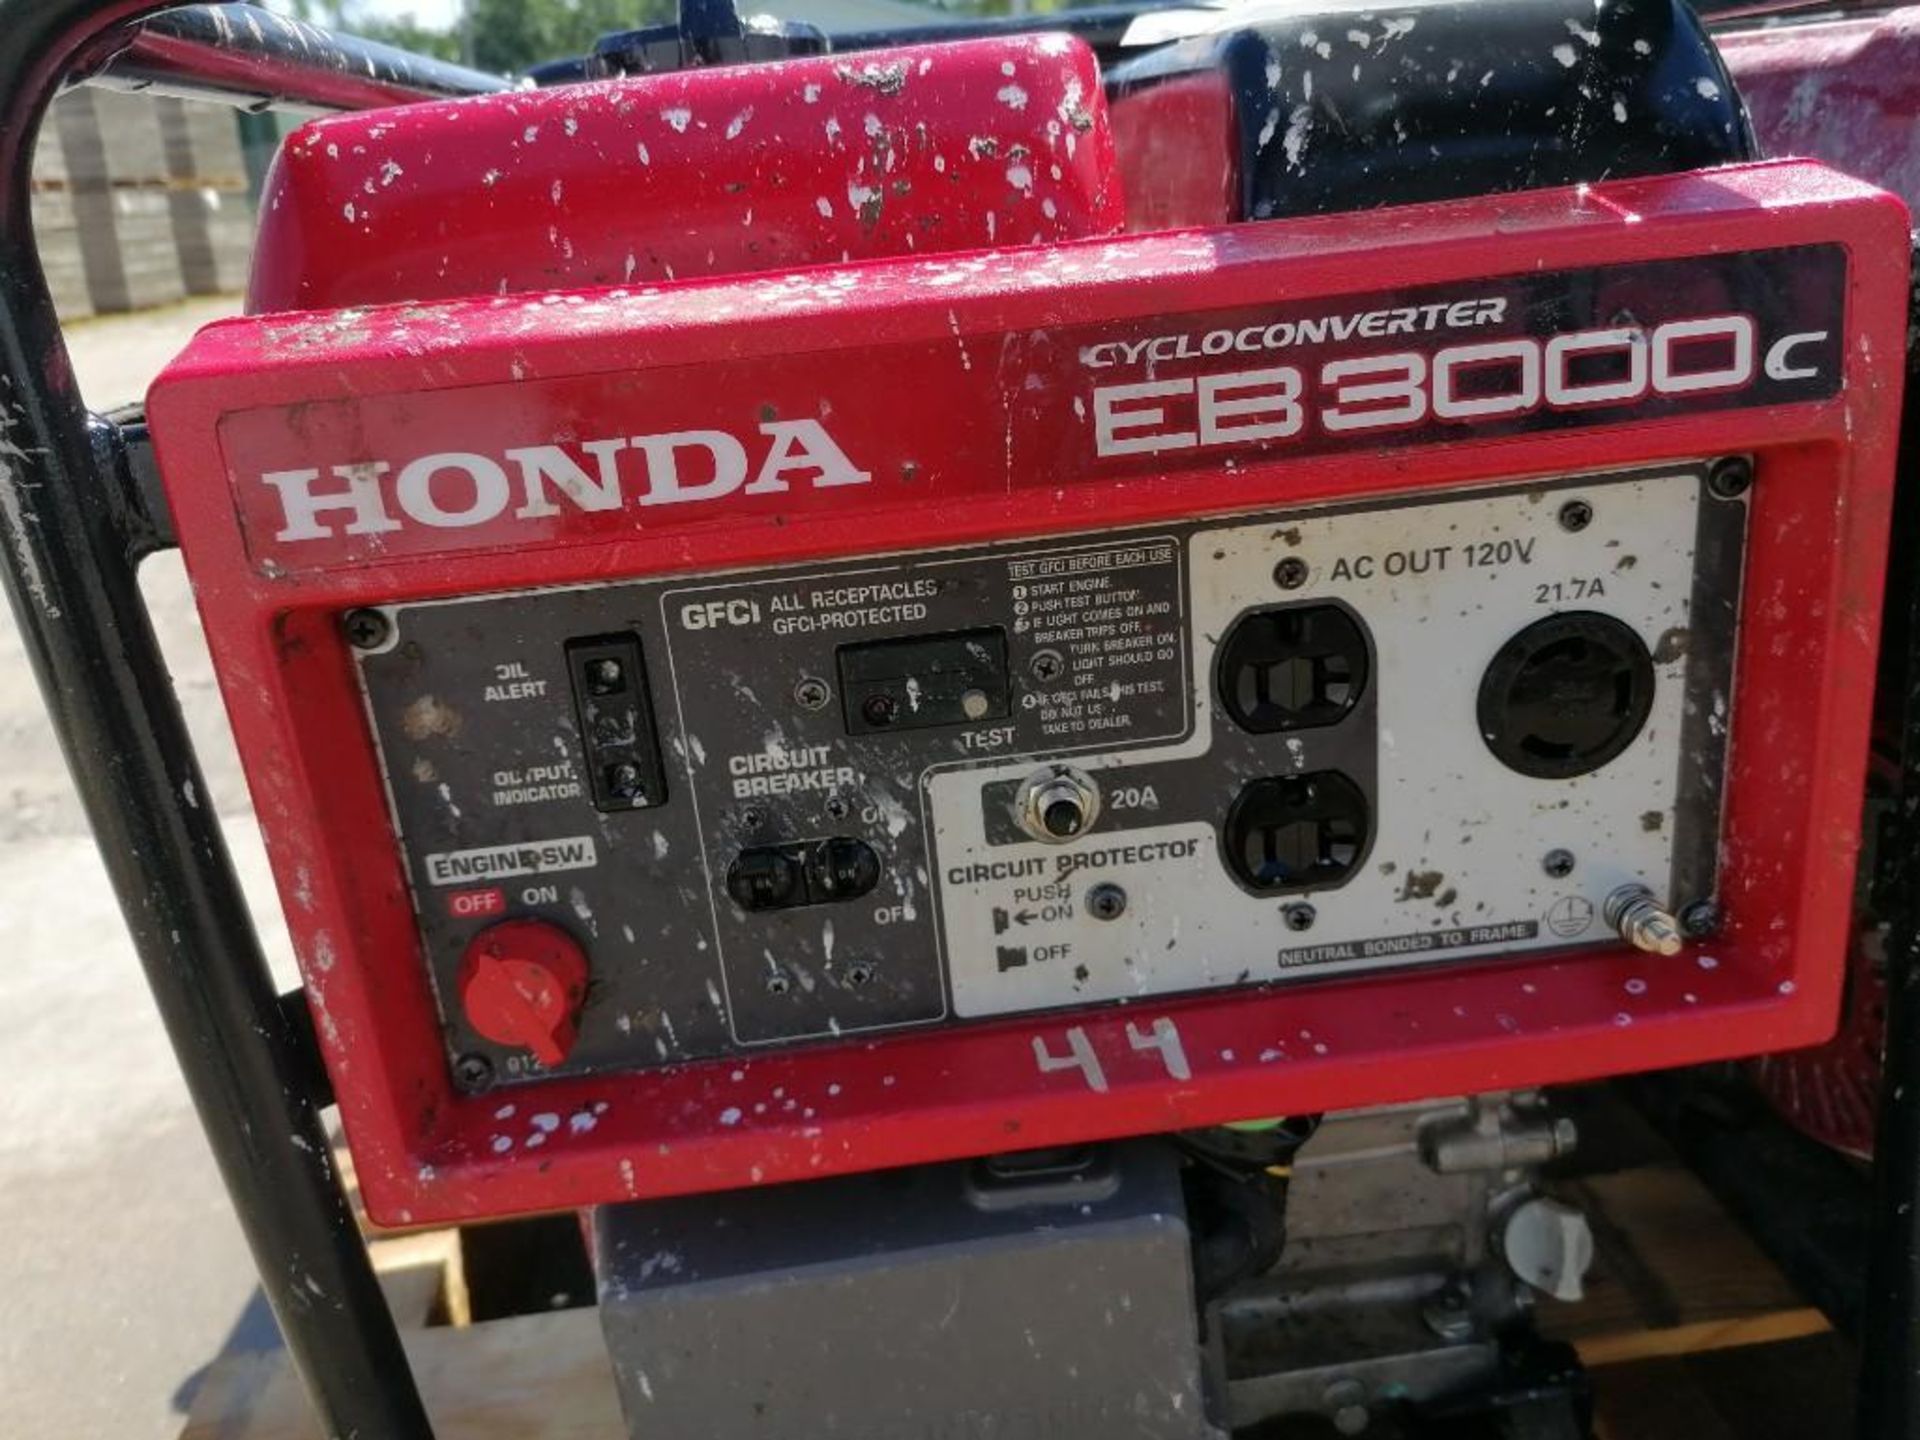 (2) Honda EB3000C Cycloconverter Generator. Located at 301 E Henry Street, Mt. Pleasant, IA 52641. - Image 3 of 6